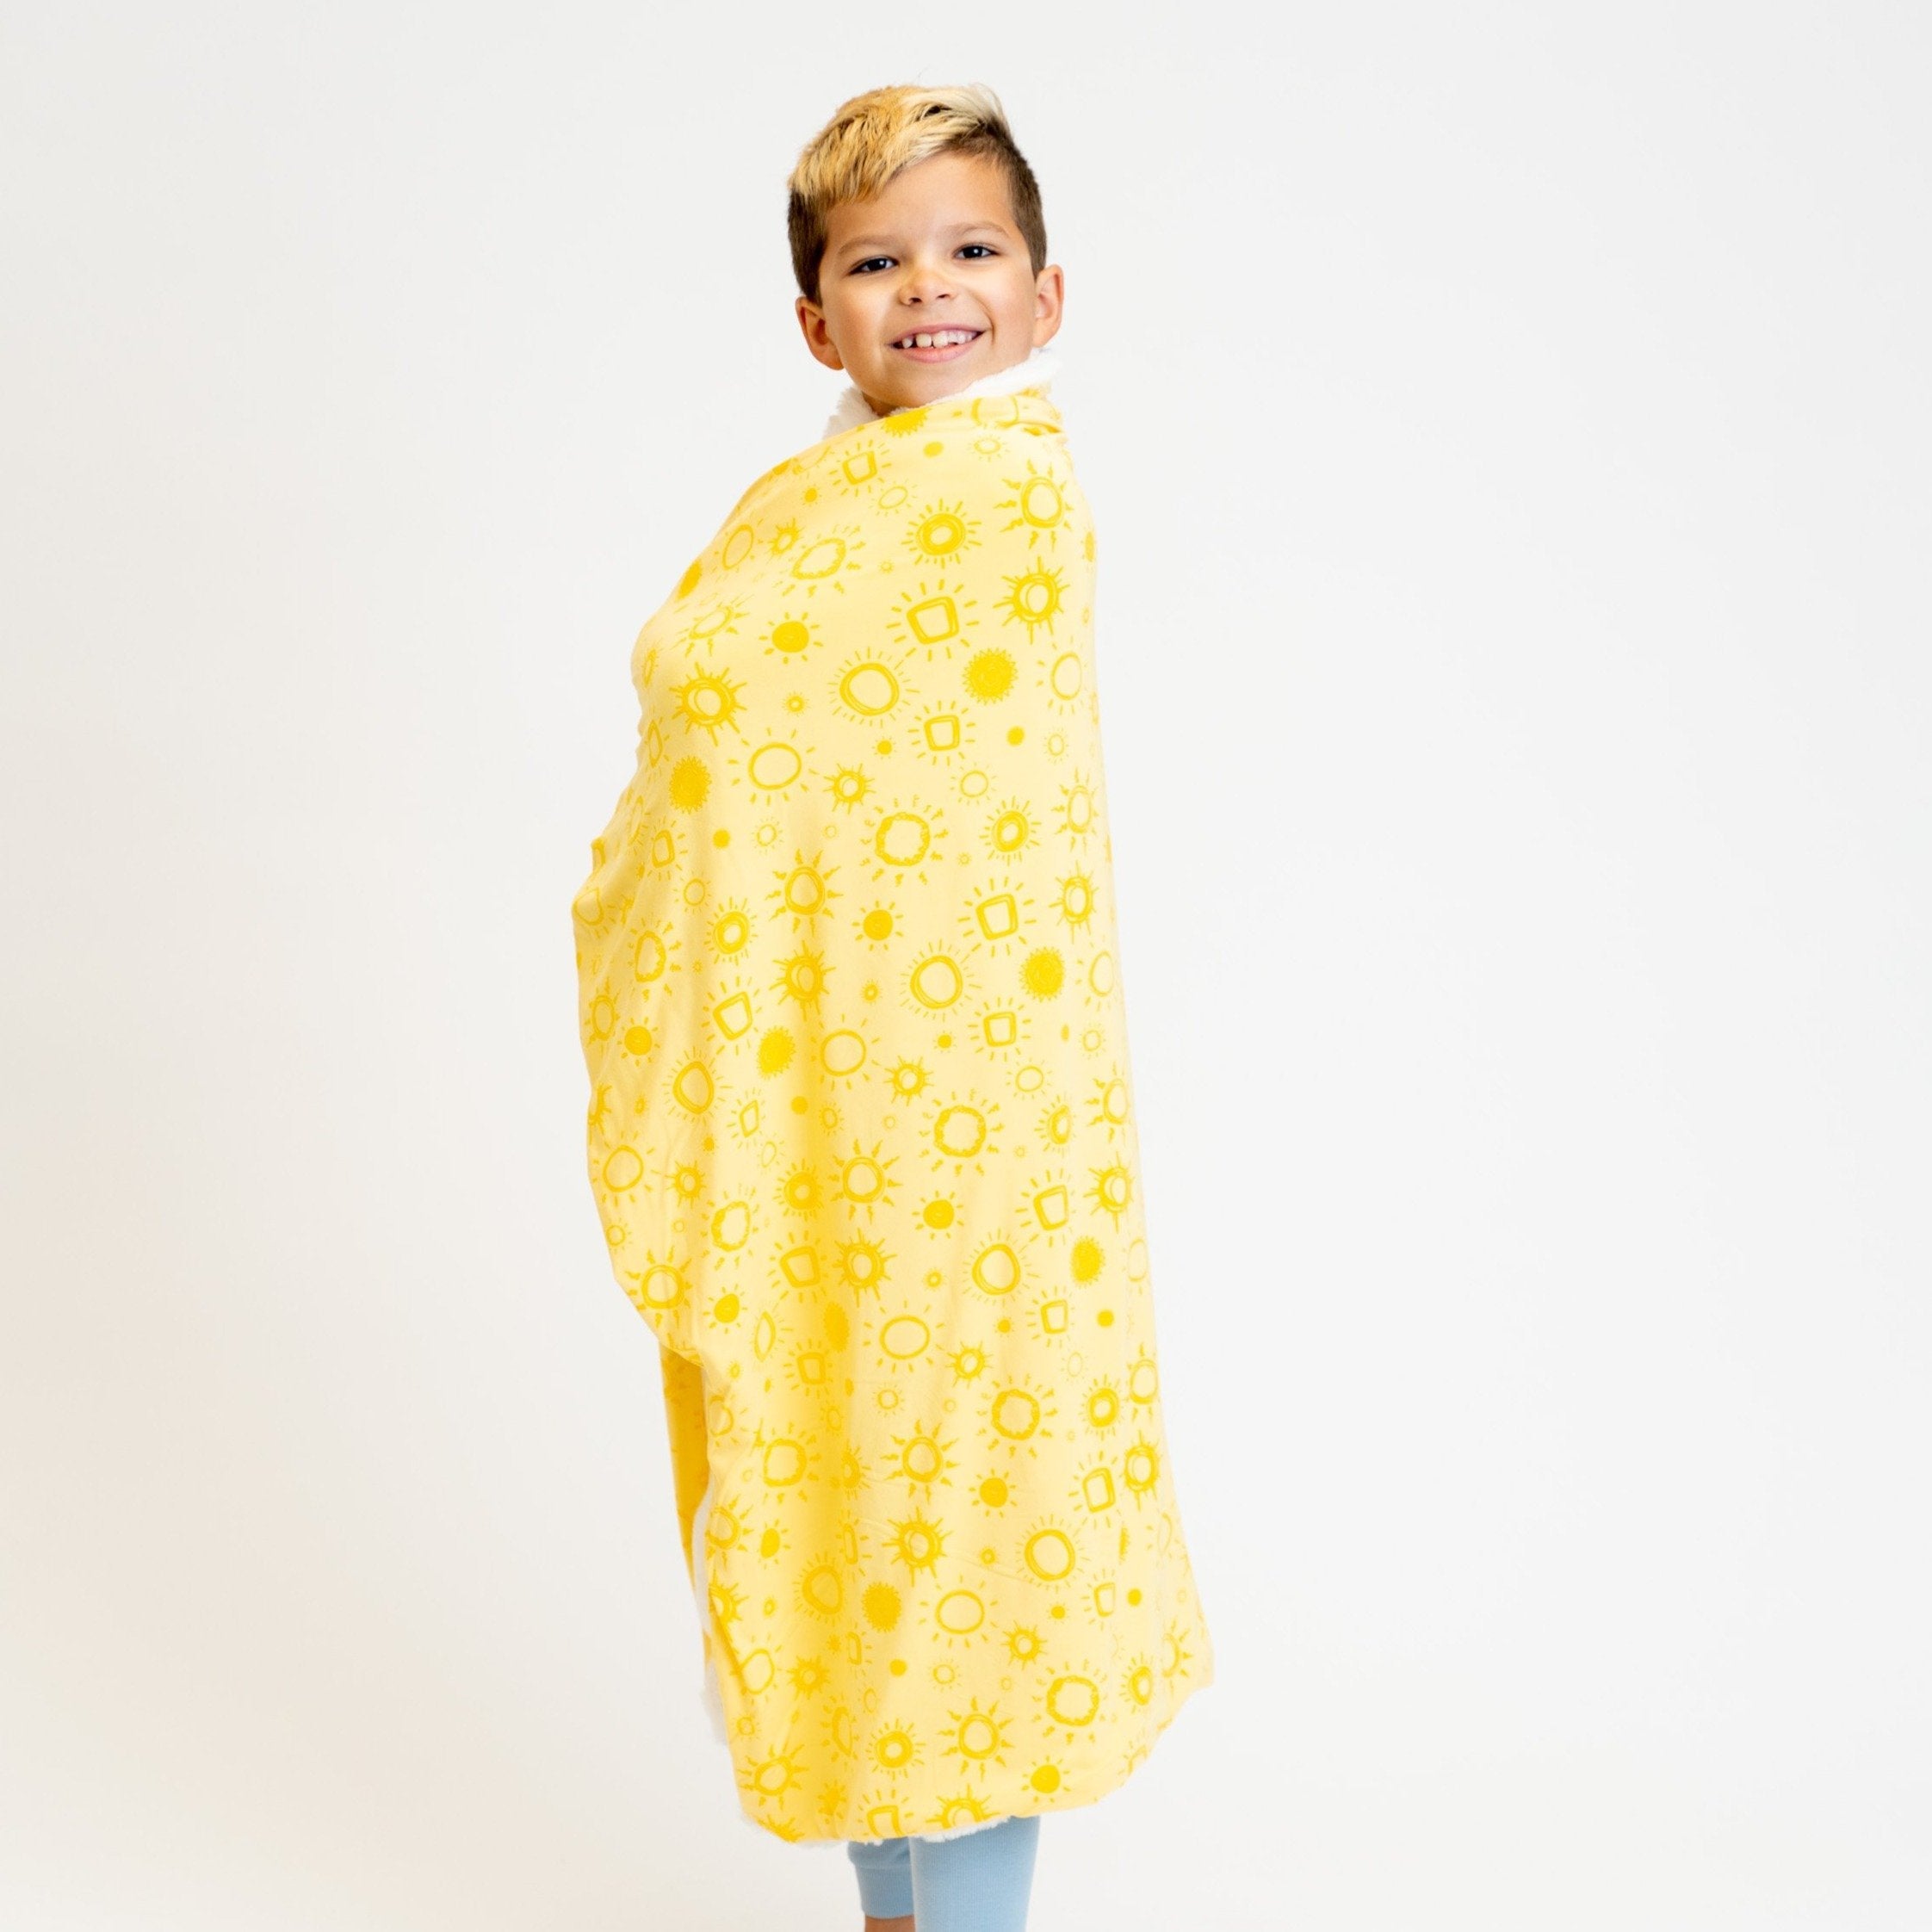 Big Kid Fur Blanket - 42 X 42 - Sunshine Yellow